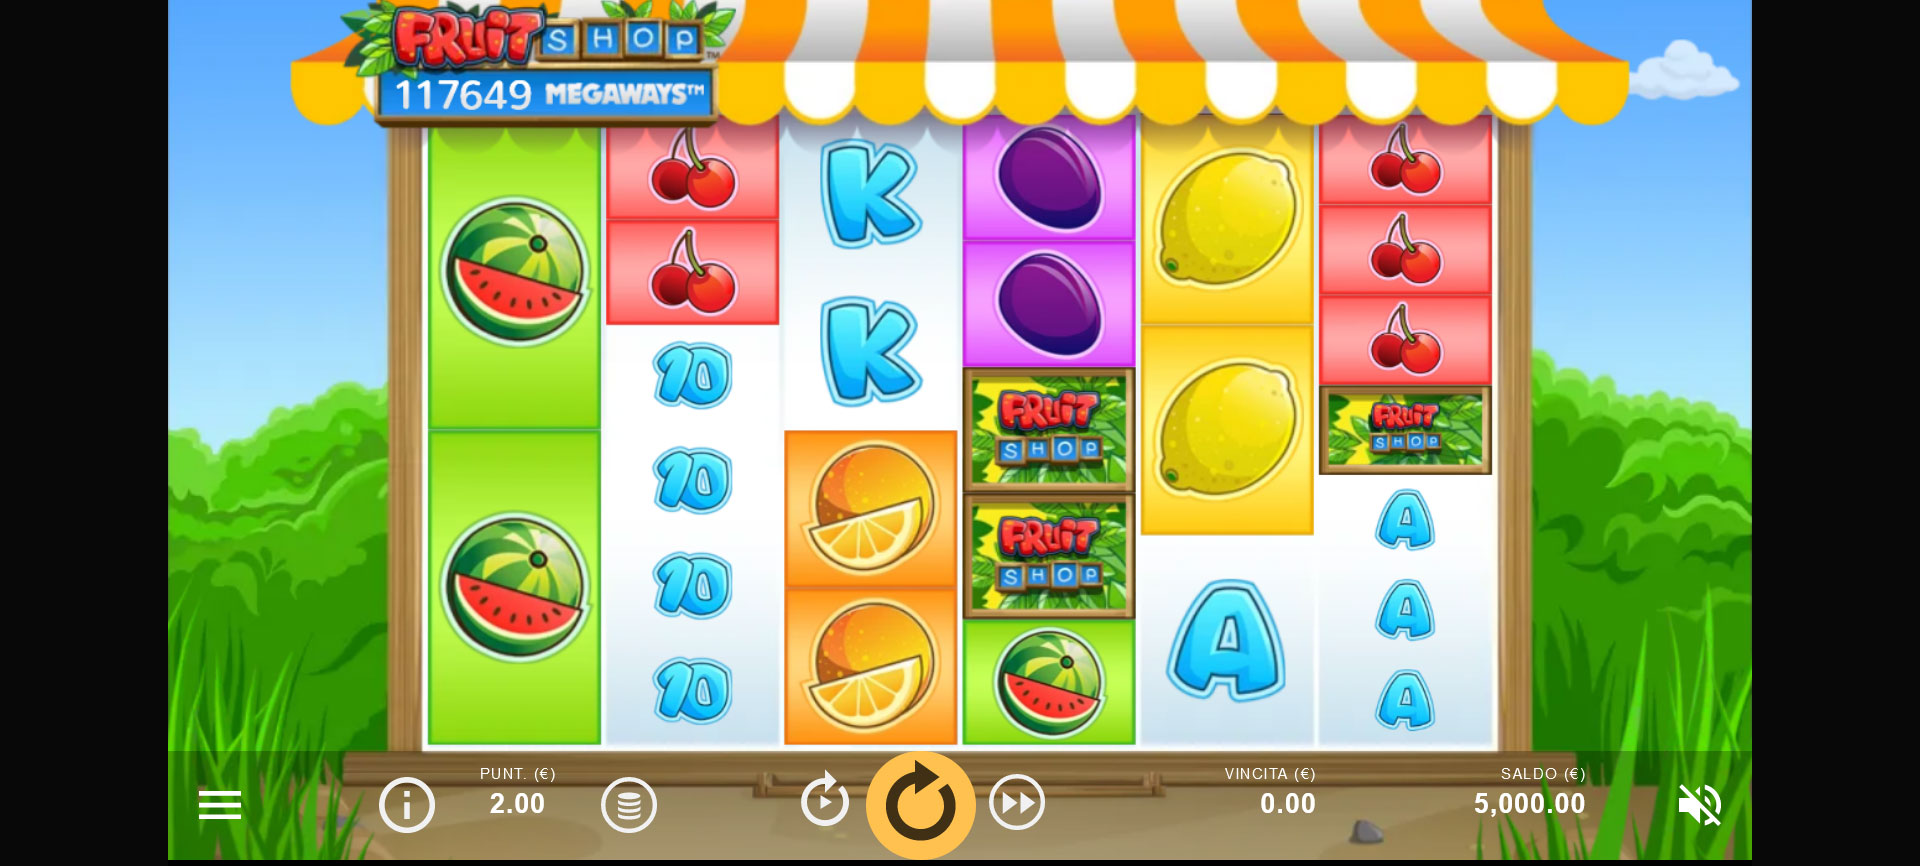 schermo del gioco slot machine Fruit Shop Megaways